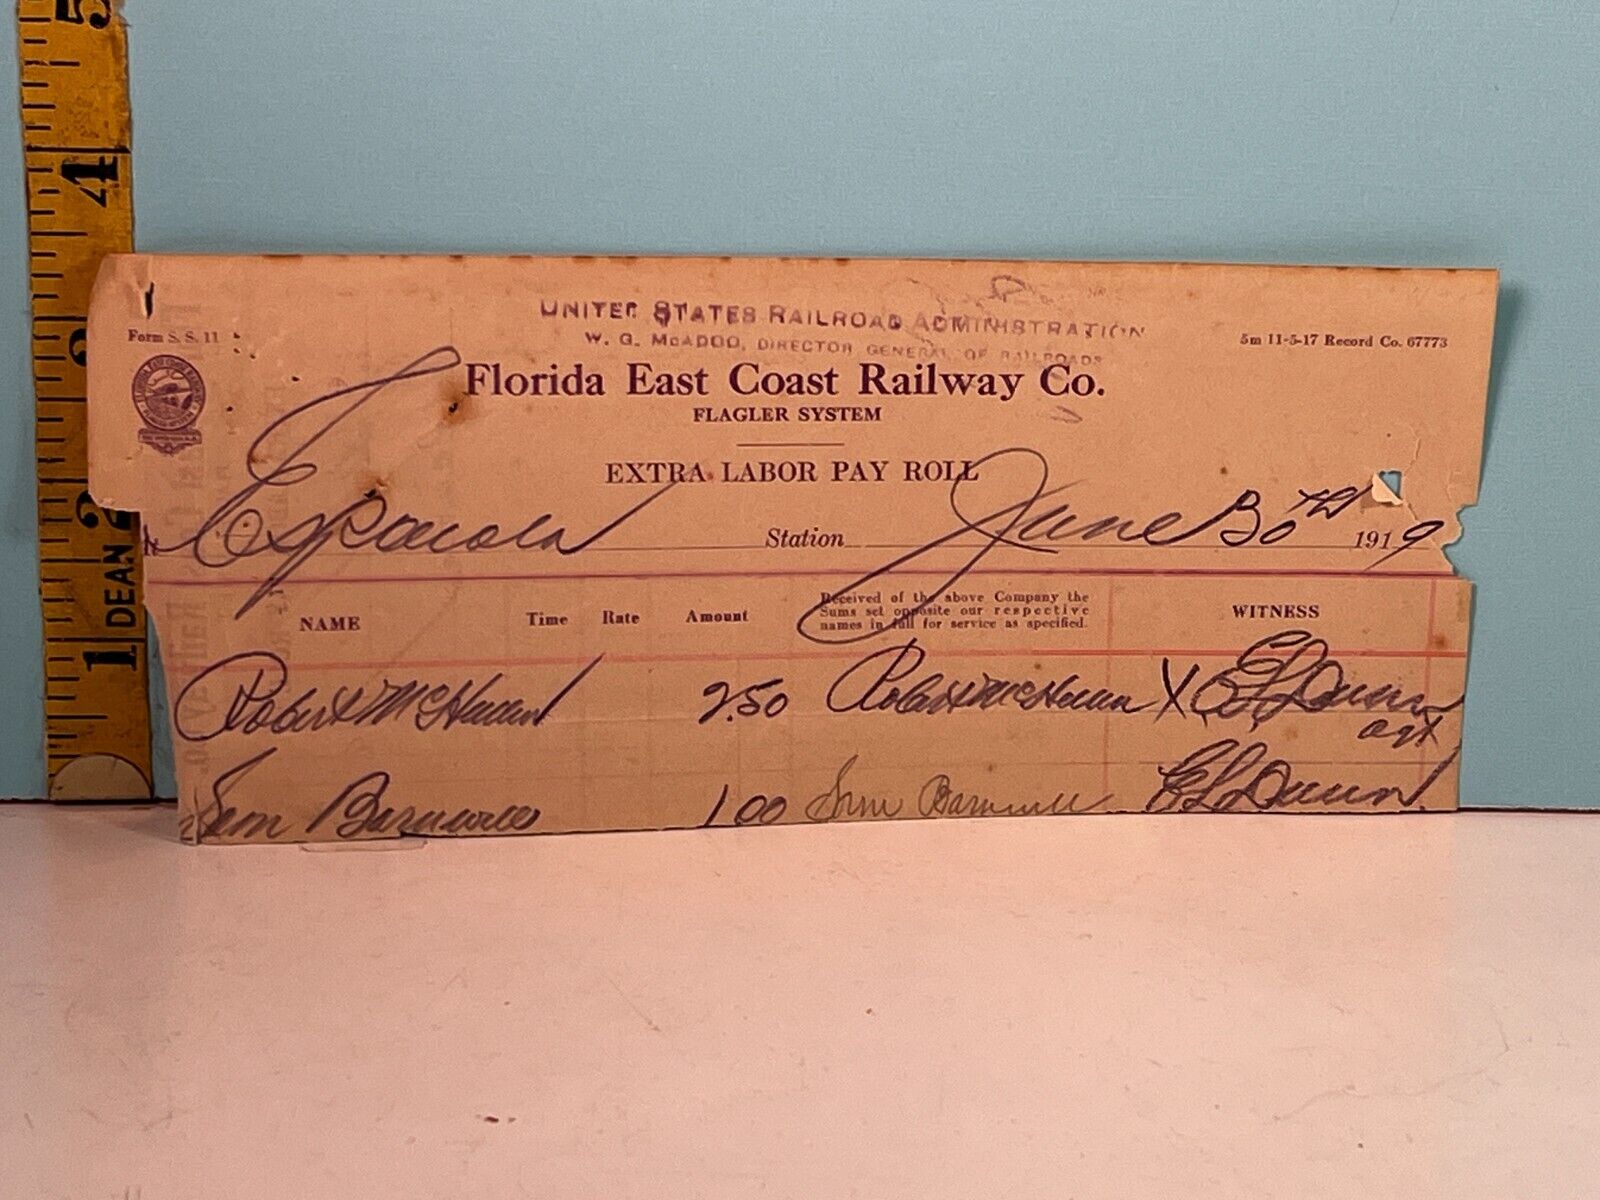 1919 Florida East Coast Railway co Extra Labor payroll form